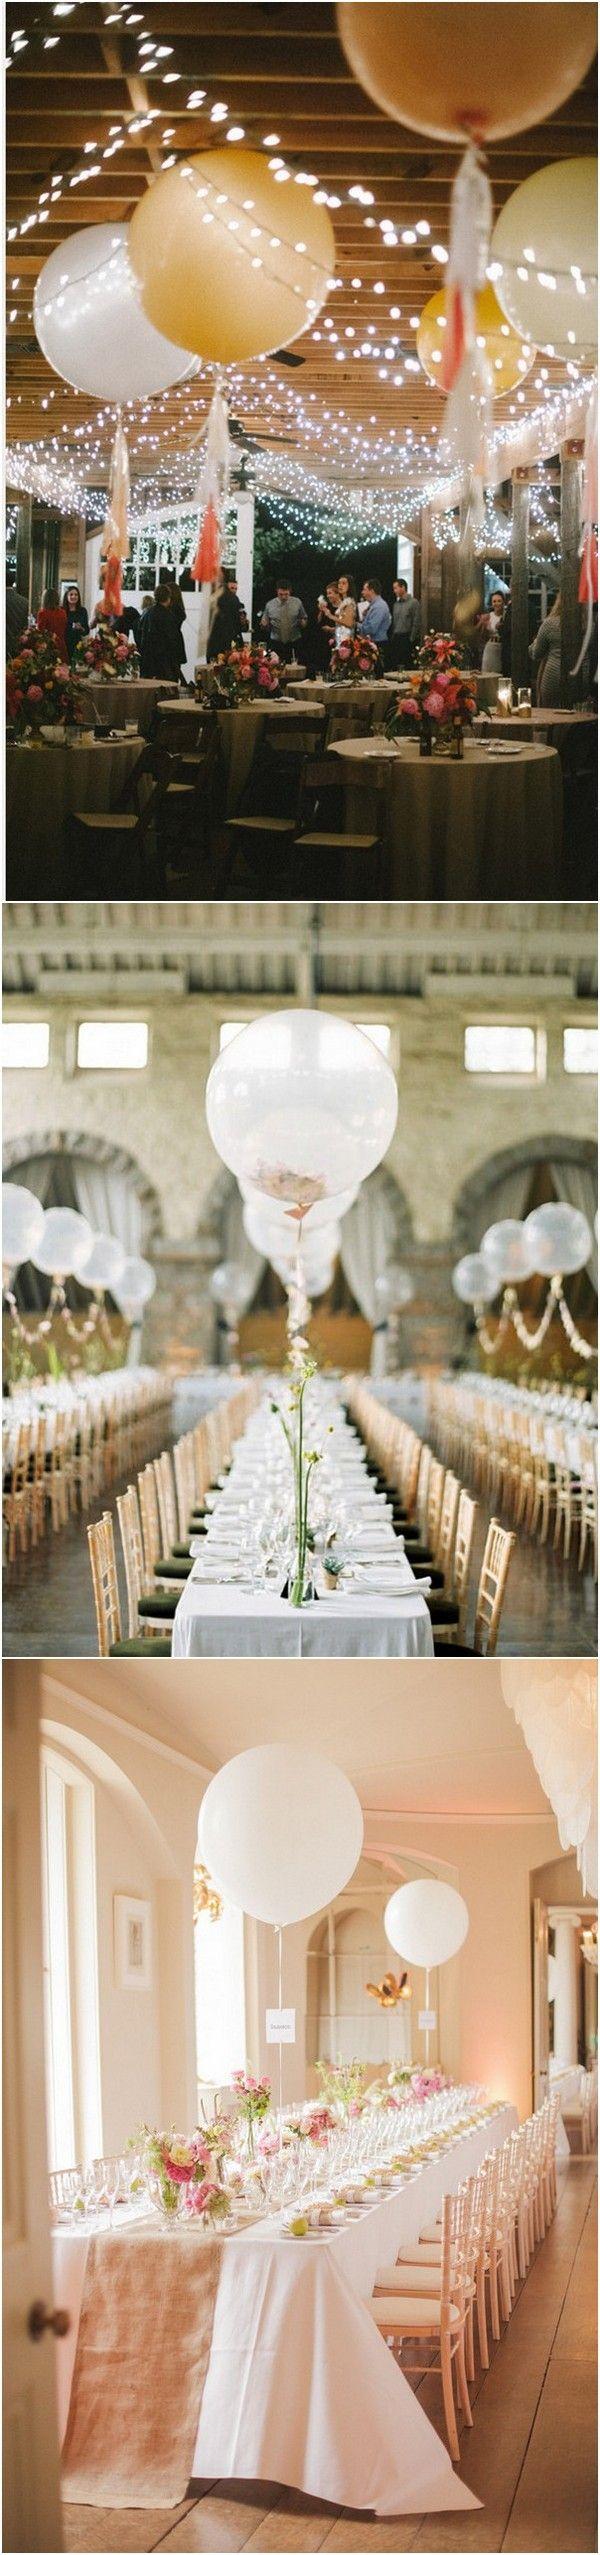 زفاف - 18 Awesome Wedding Ideas To Use Balloons - Page 2 Of 2